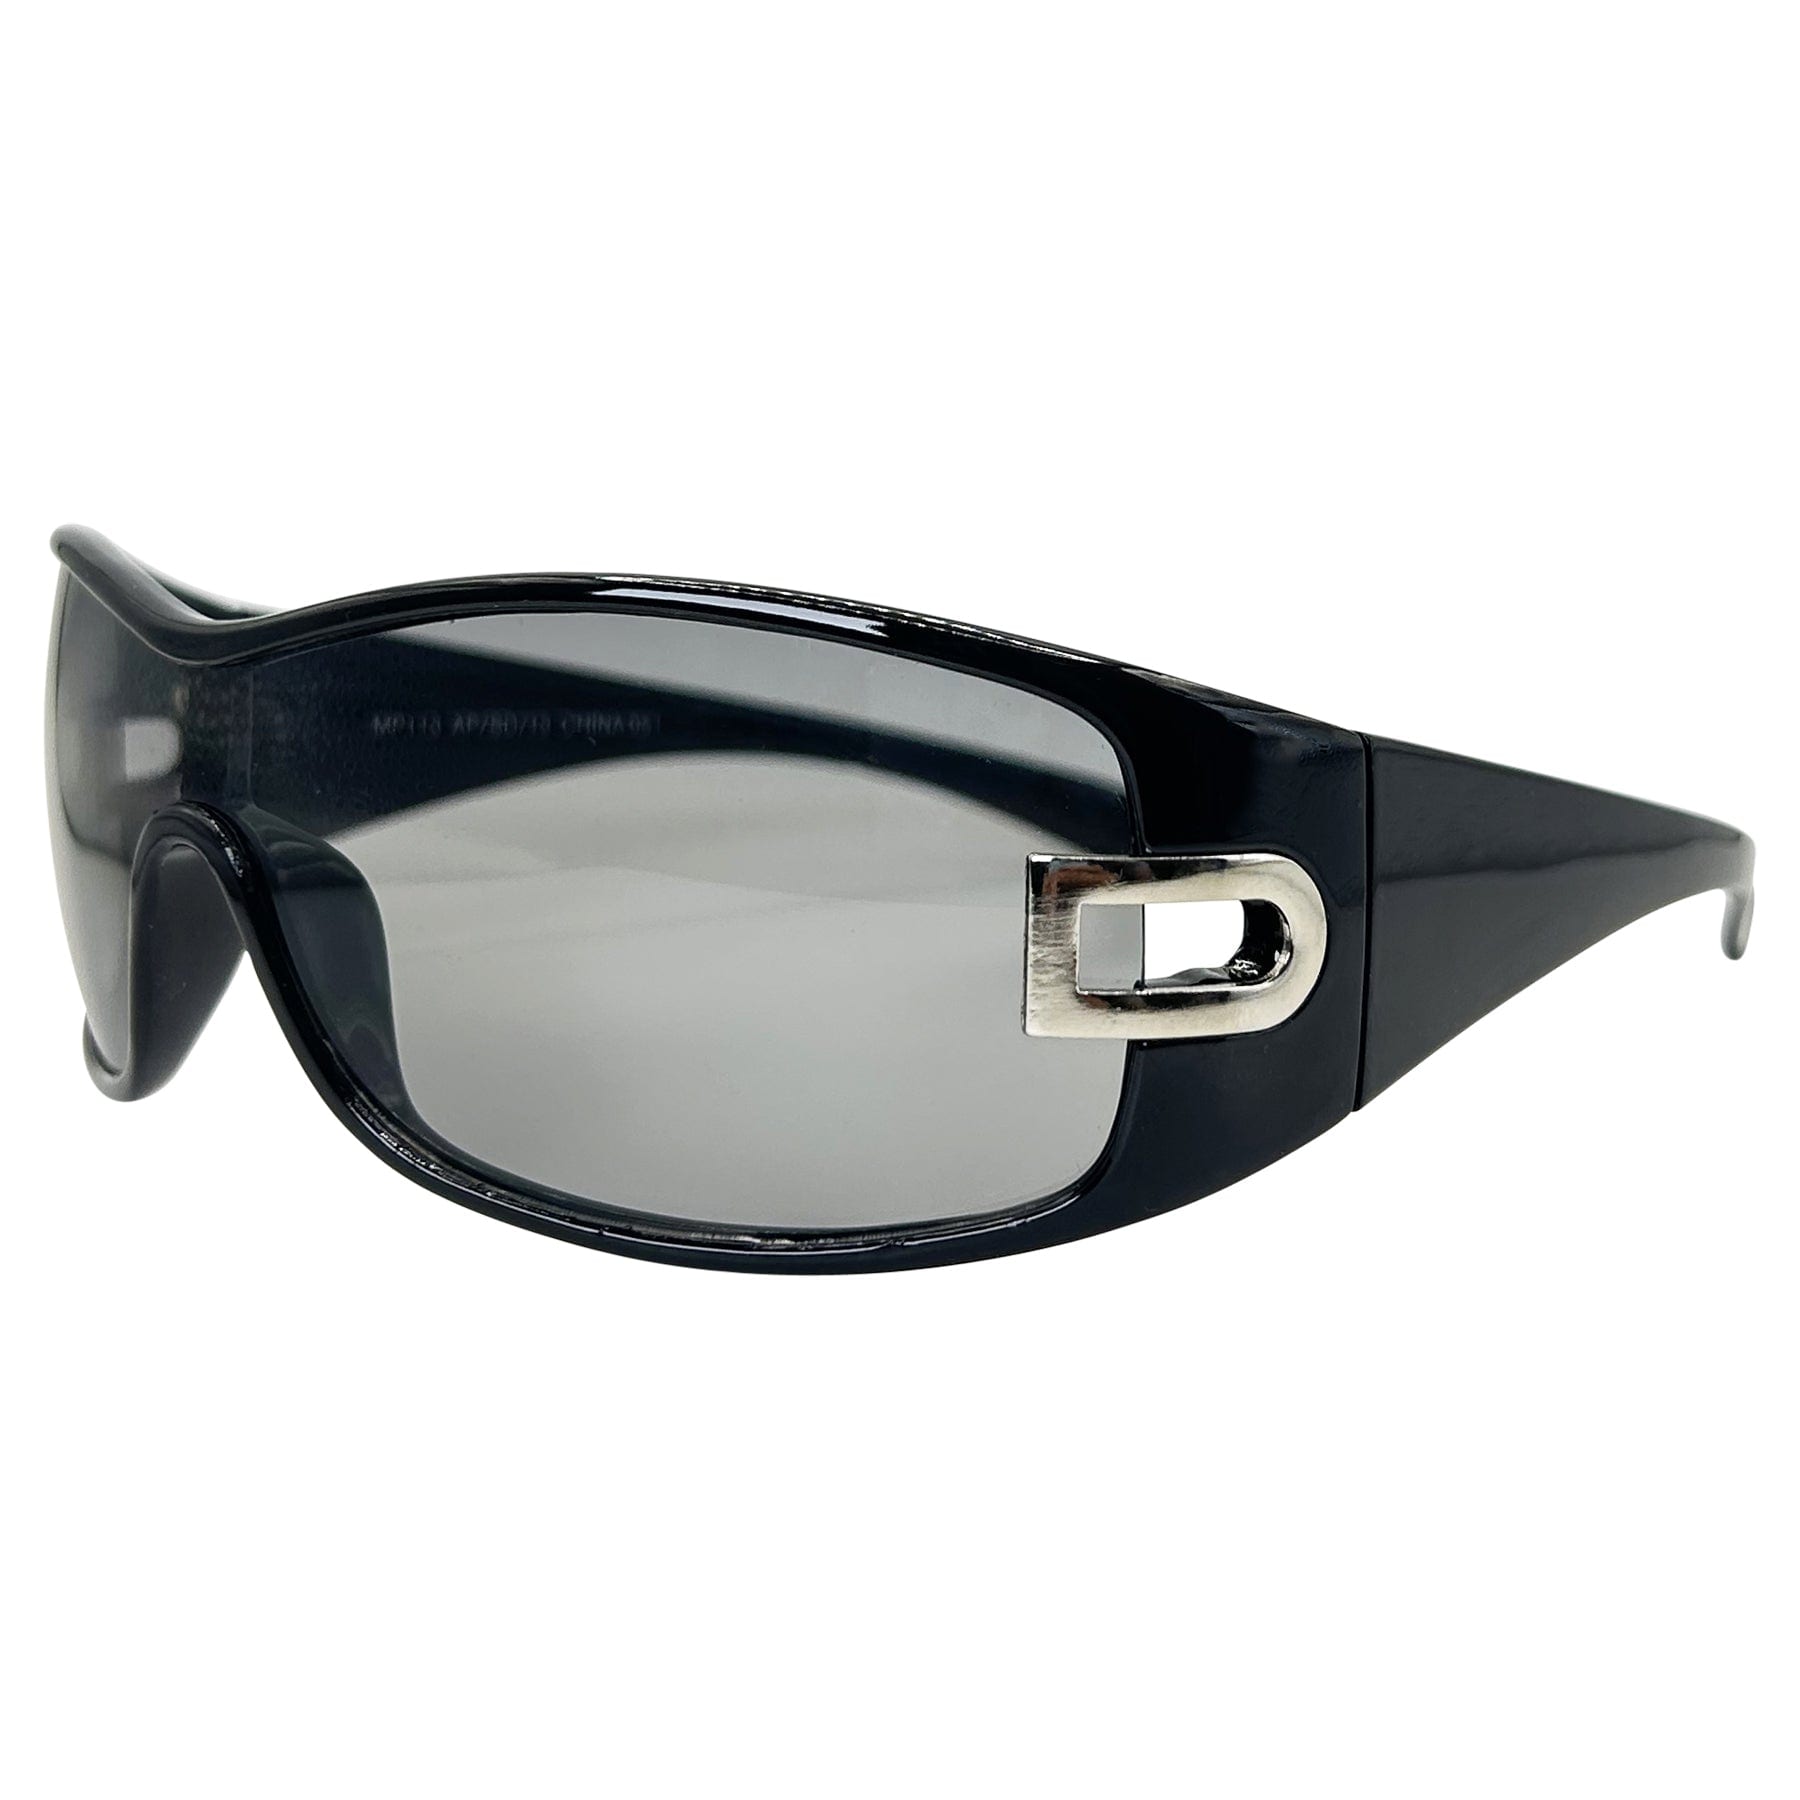 y2k shield sport sunglasses with a wraparound frame